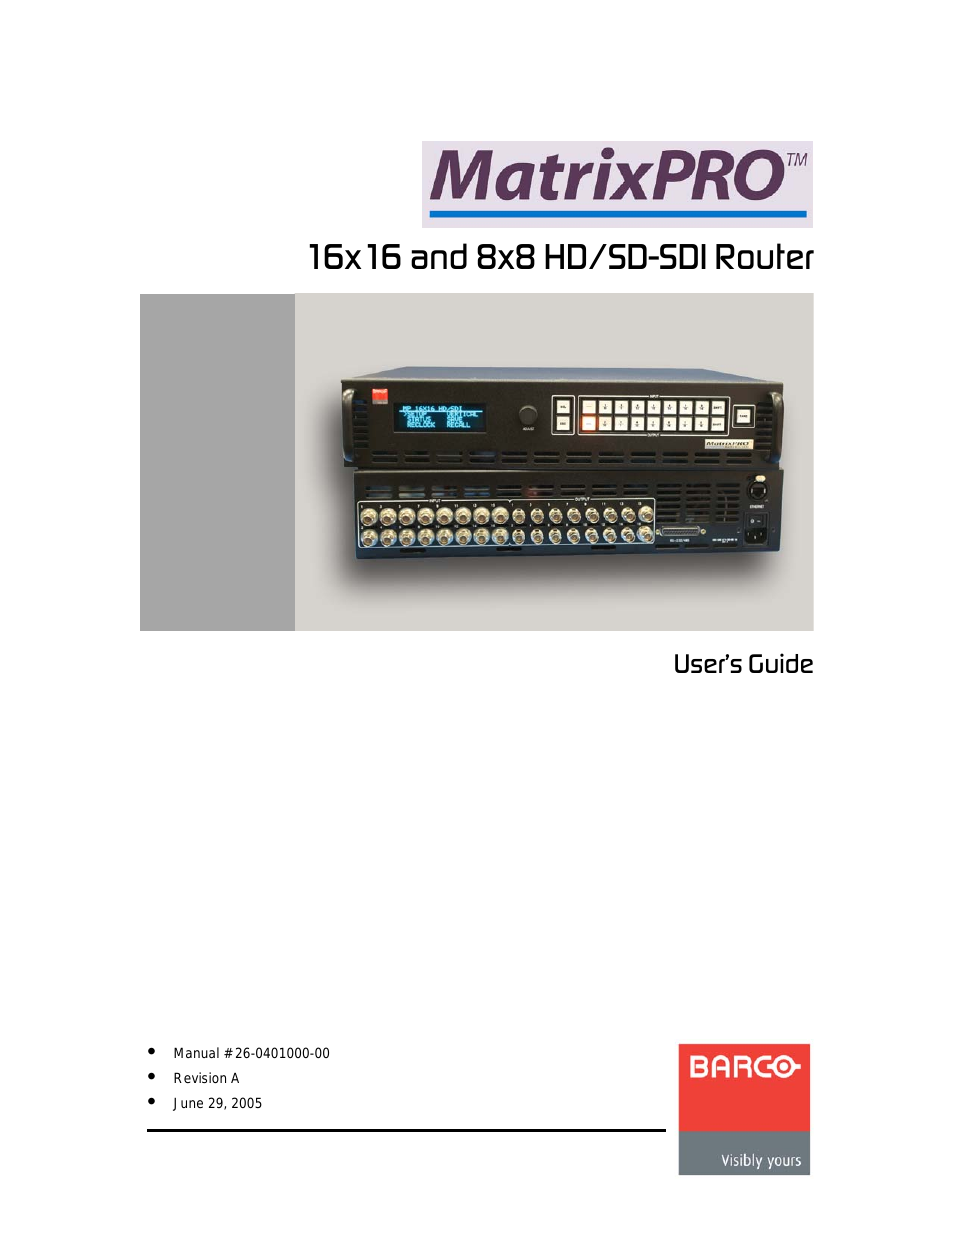 MatrixPRO HD/SD-SDI